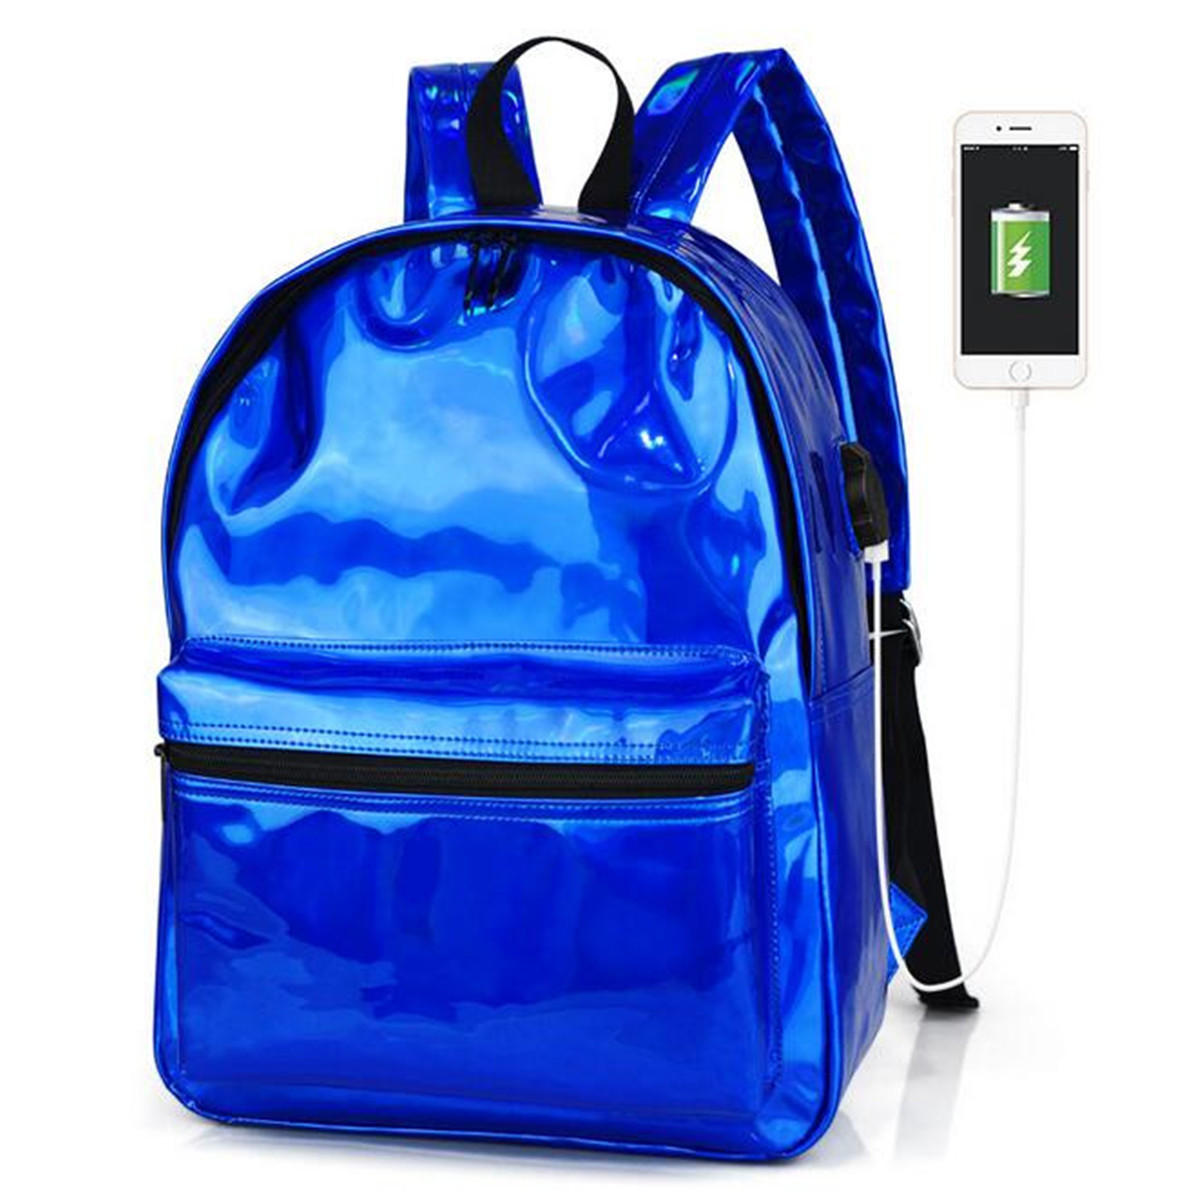 USB PU Rucksack Wasserdicht 14 Zoll Laptop Schule Tasche Camping Travel Pack Schultertasche Handtasche